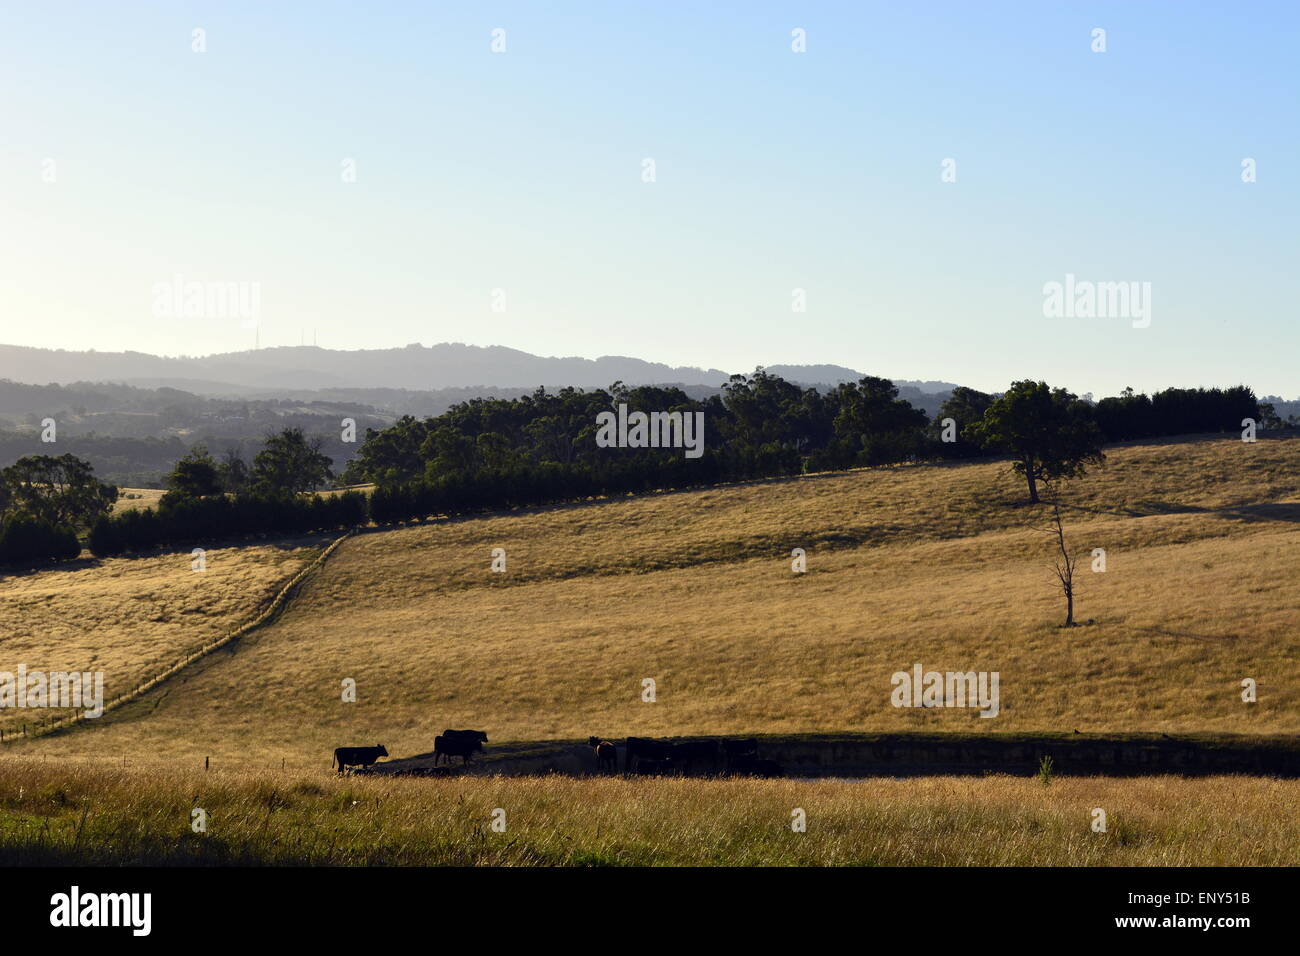 Australian, Farm, Rolling Hills, Golden Plains, Grass, Trees, Cow, Paddock, Blue Skies, Land Scape, Victoria Australia, Stock Photo